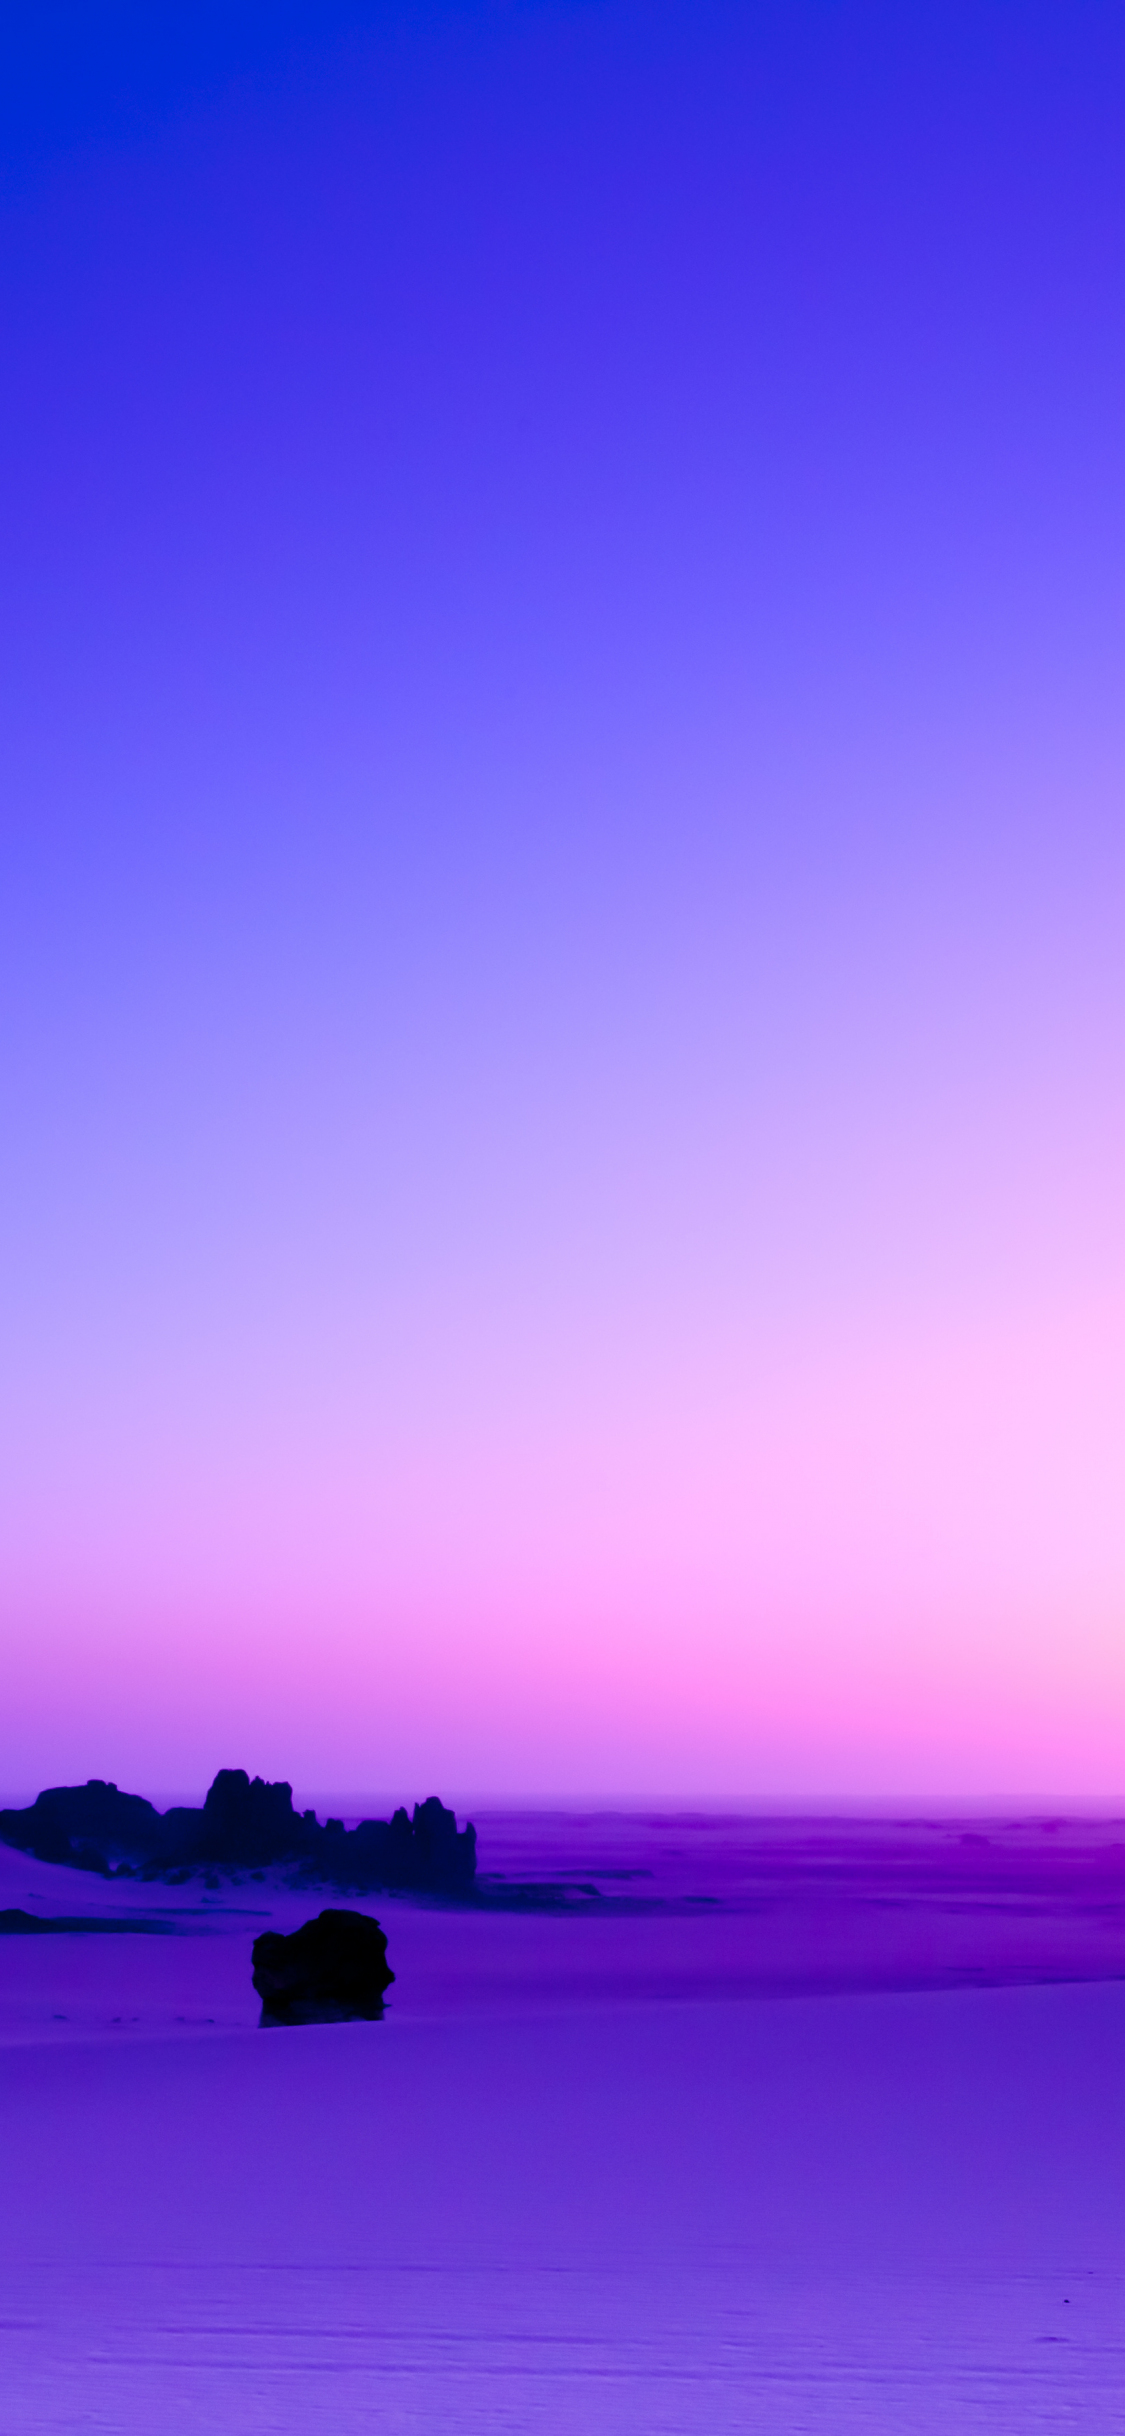 Download wallpaper 1125x2436 purple, sunset, skyline, desert, landscape, iphone x, 1125x2436 HD background, 8643